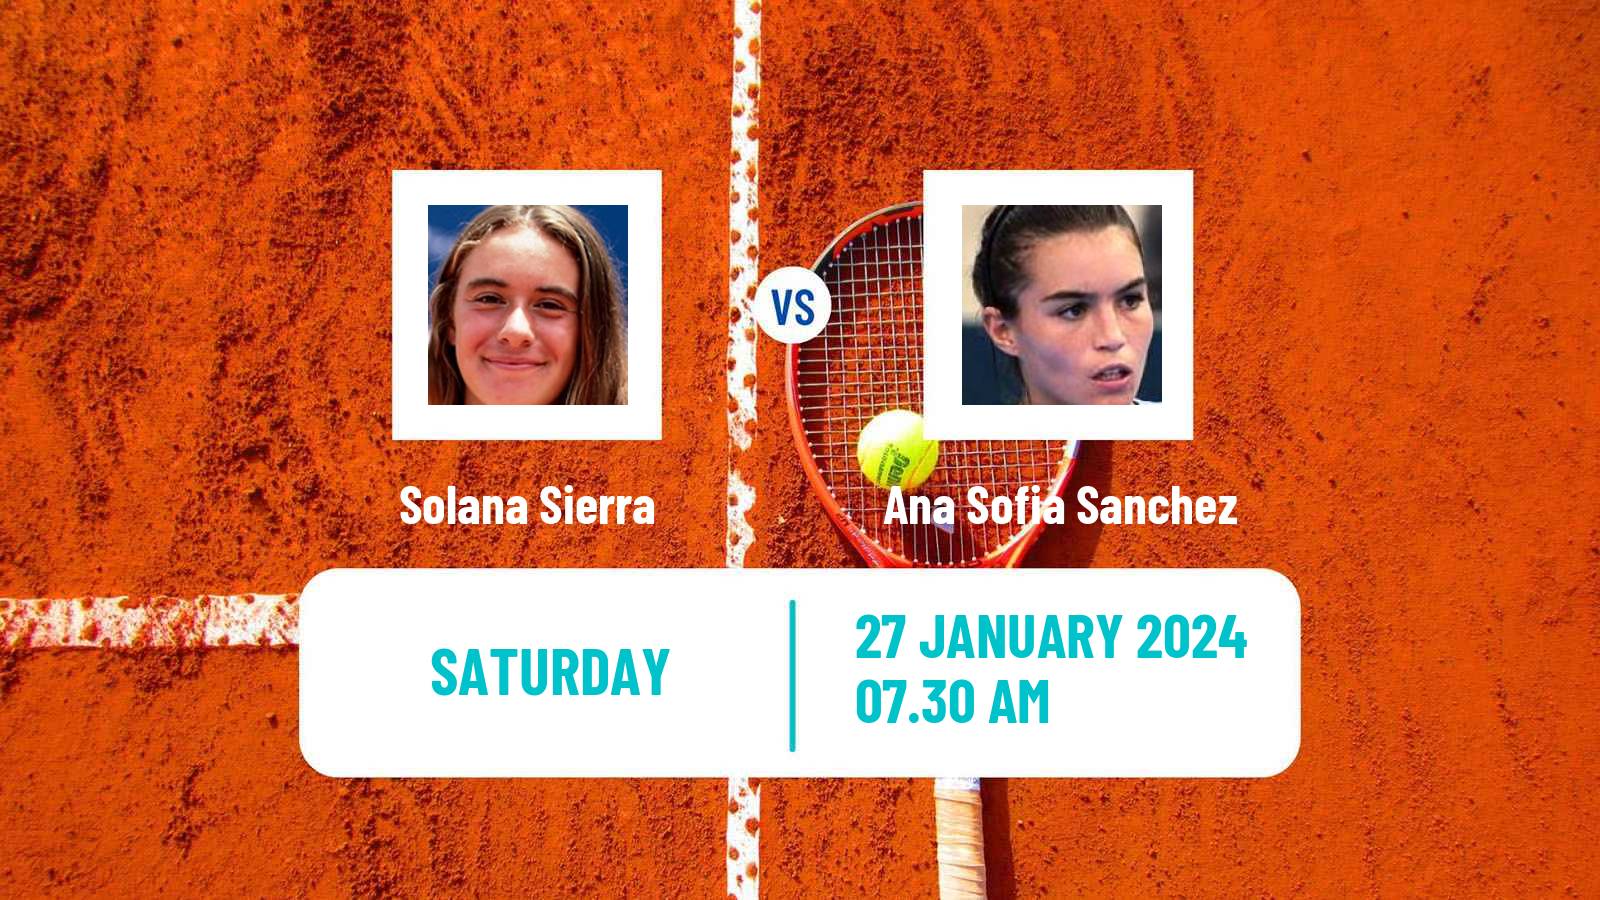 Tennis ITF W35 Buenos Aires 2 Women Solana Sierra - Ana Sofia Sanchez